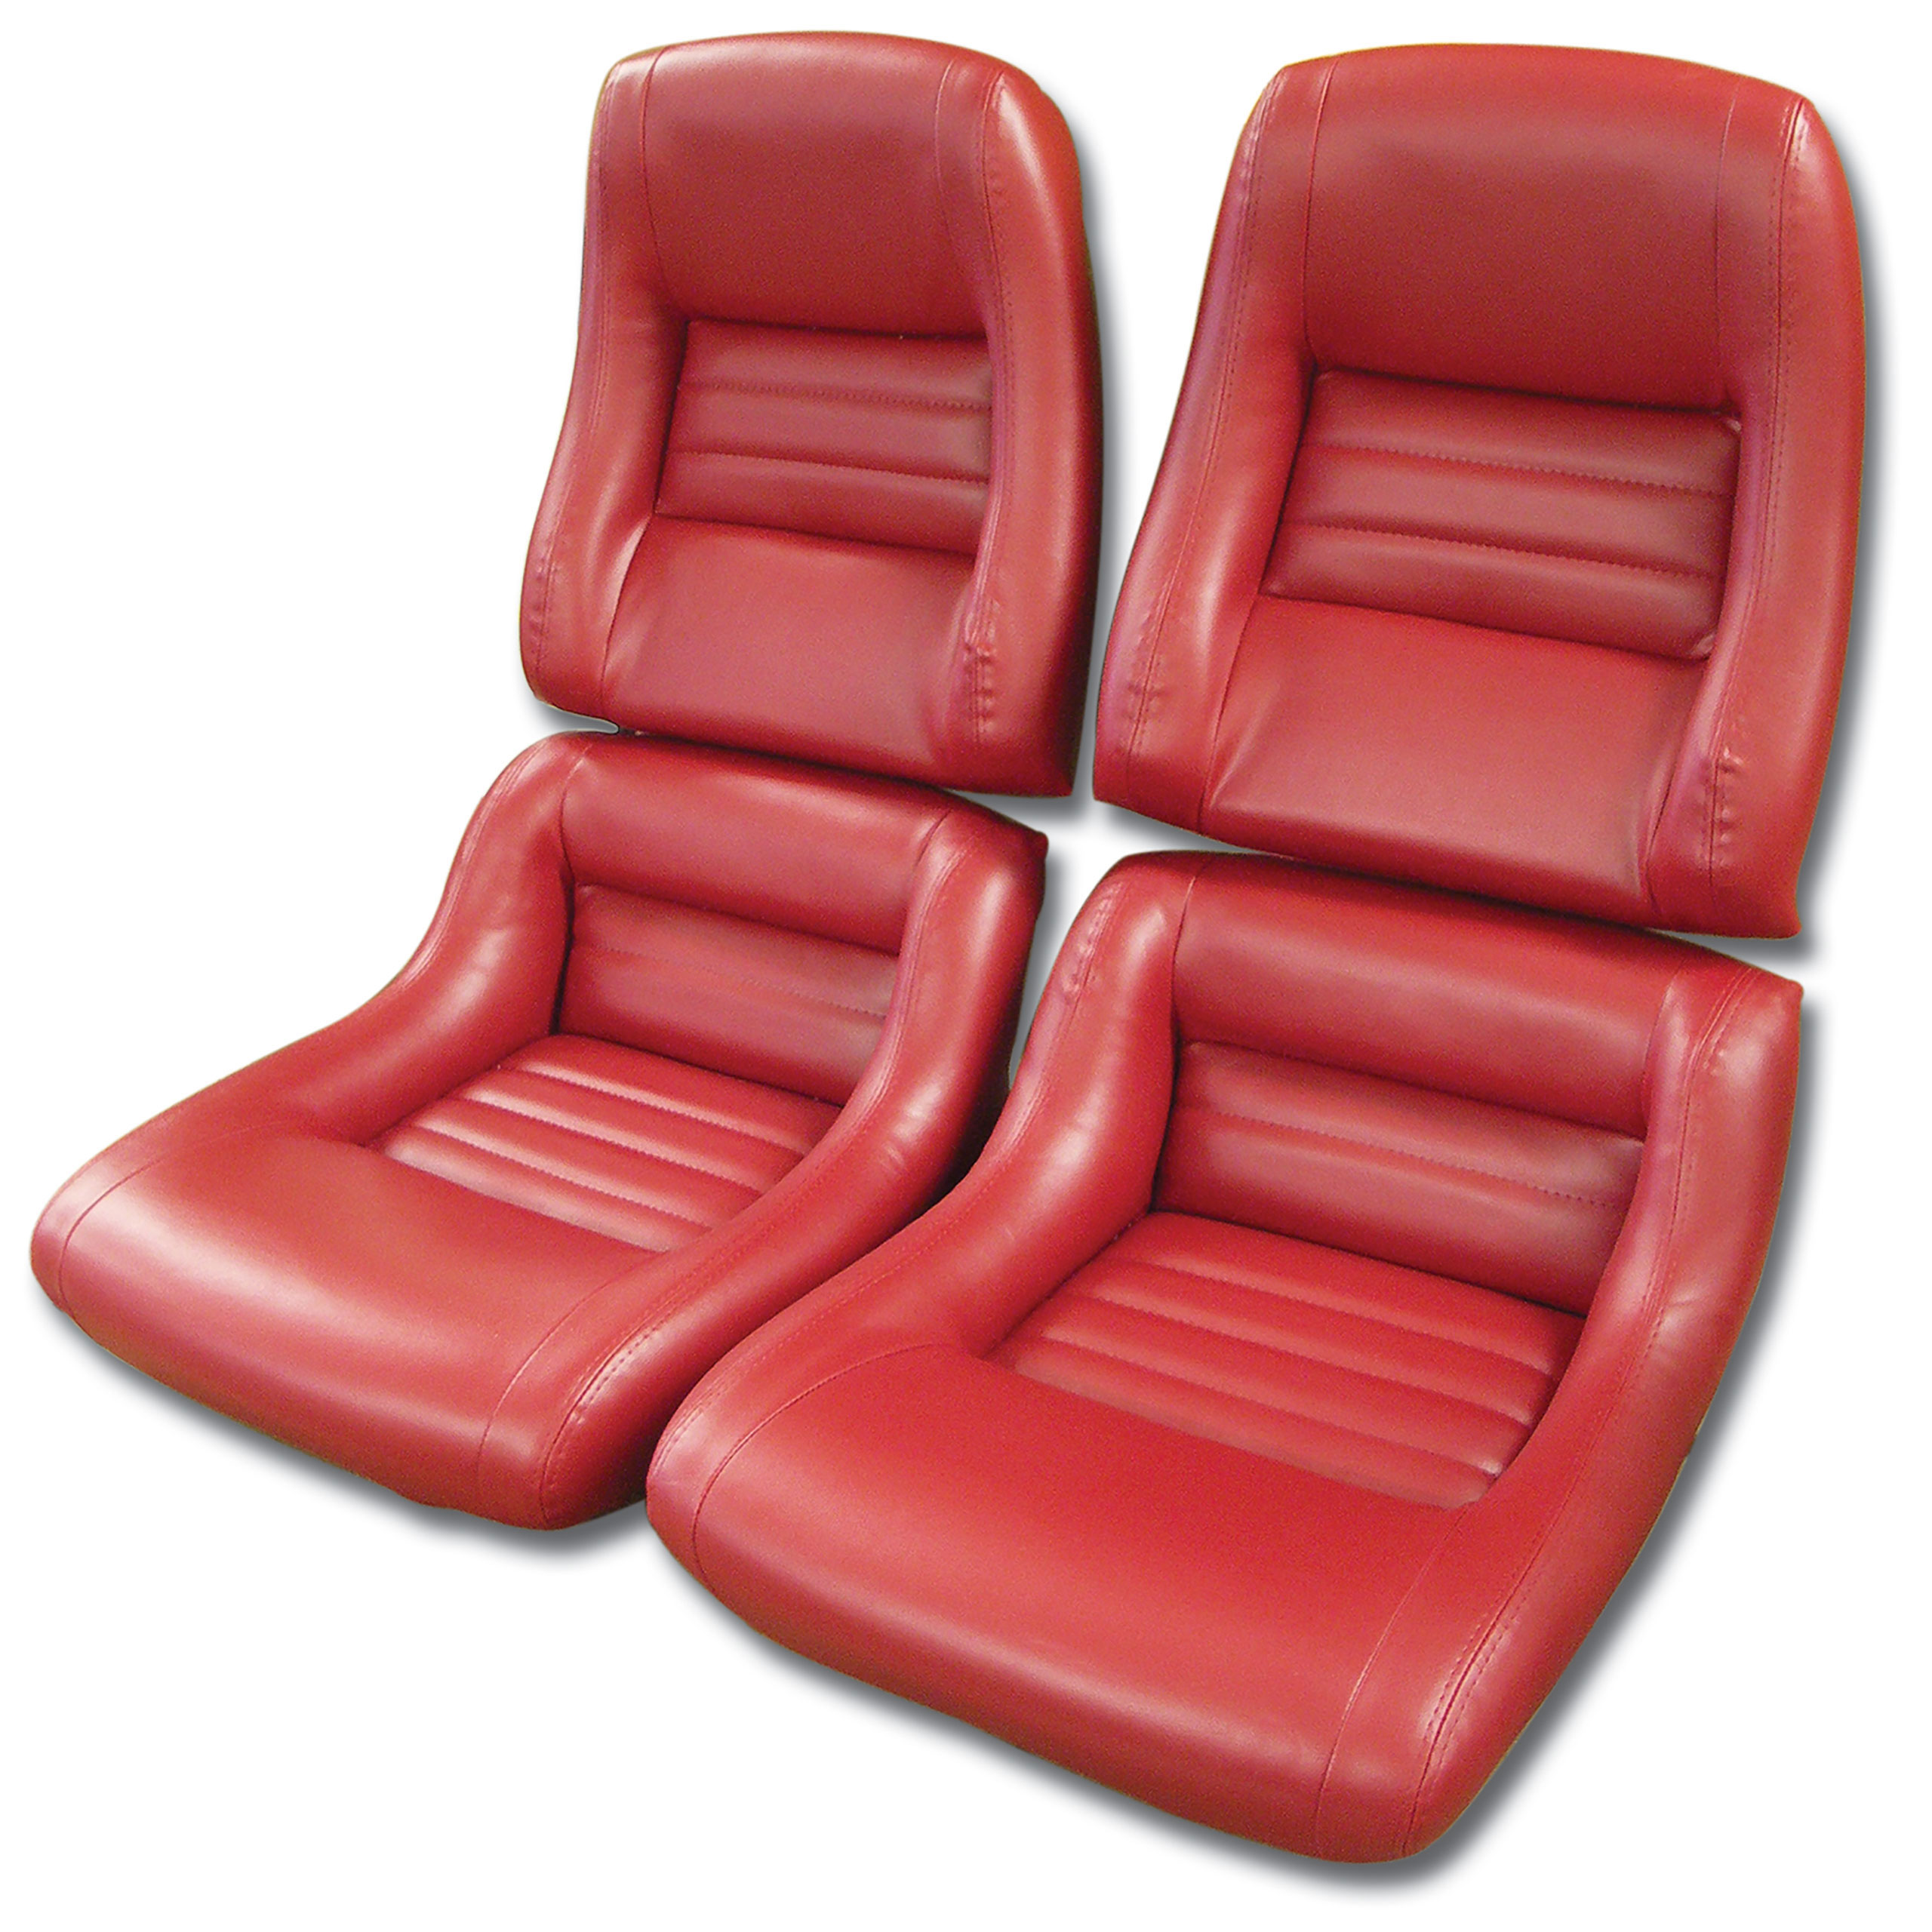 1979-1981 Corvette C3 "Leather-Like" Vinyl Seat Covers Red 2" Bolster CA-421624 